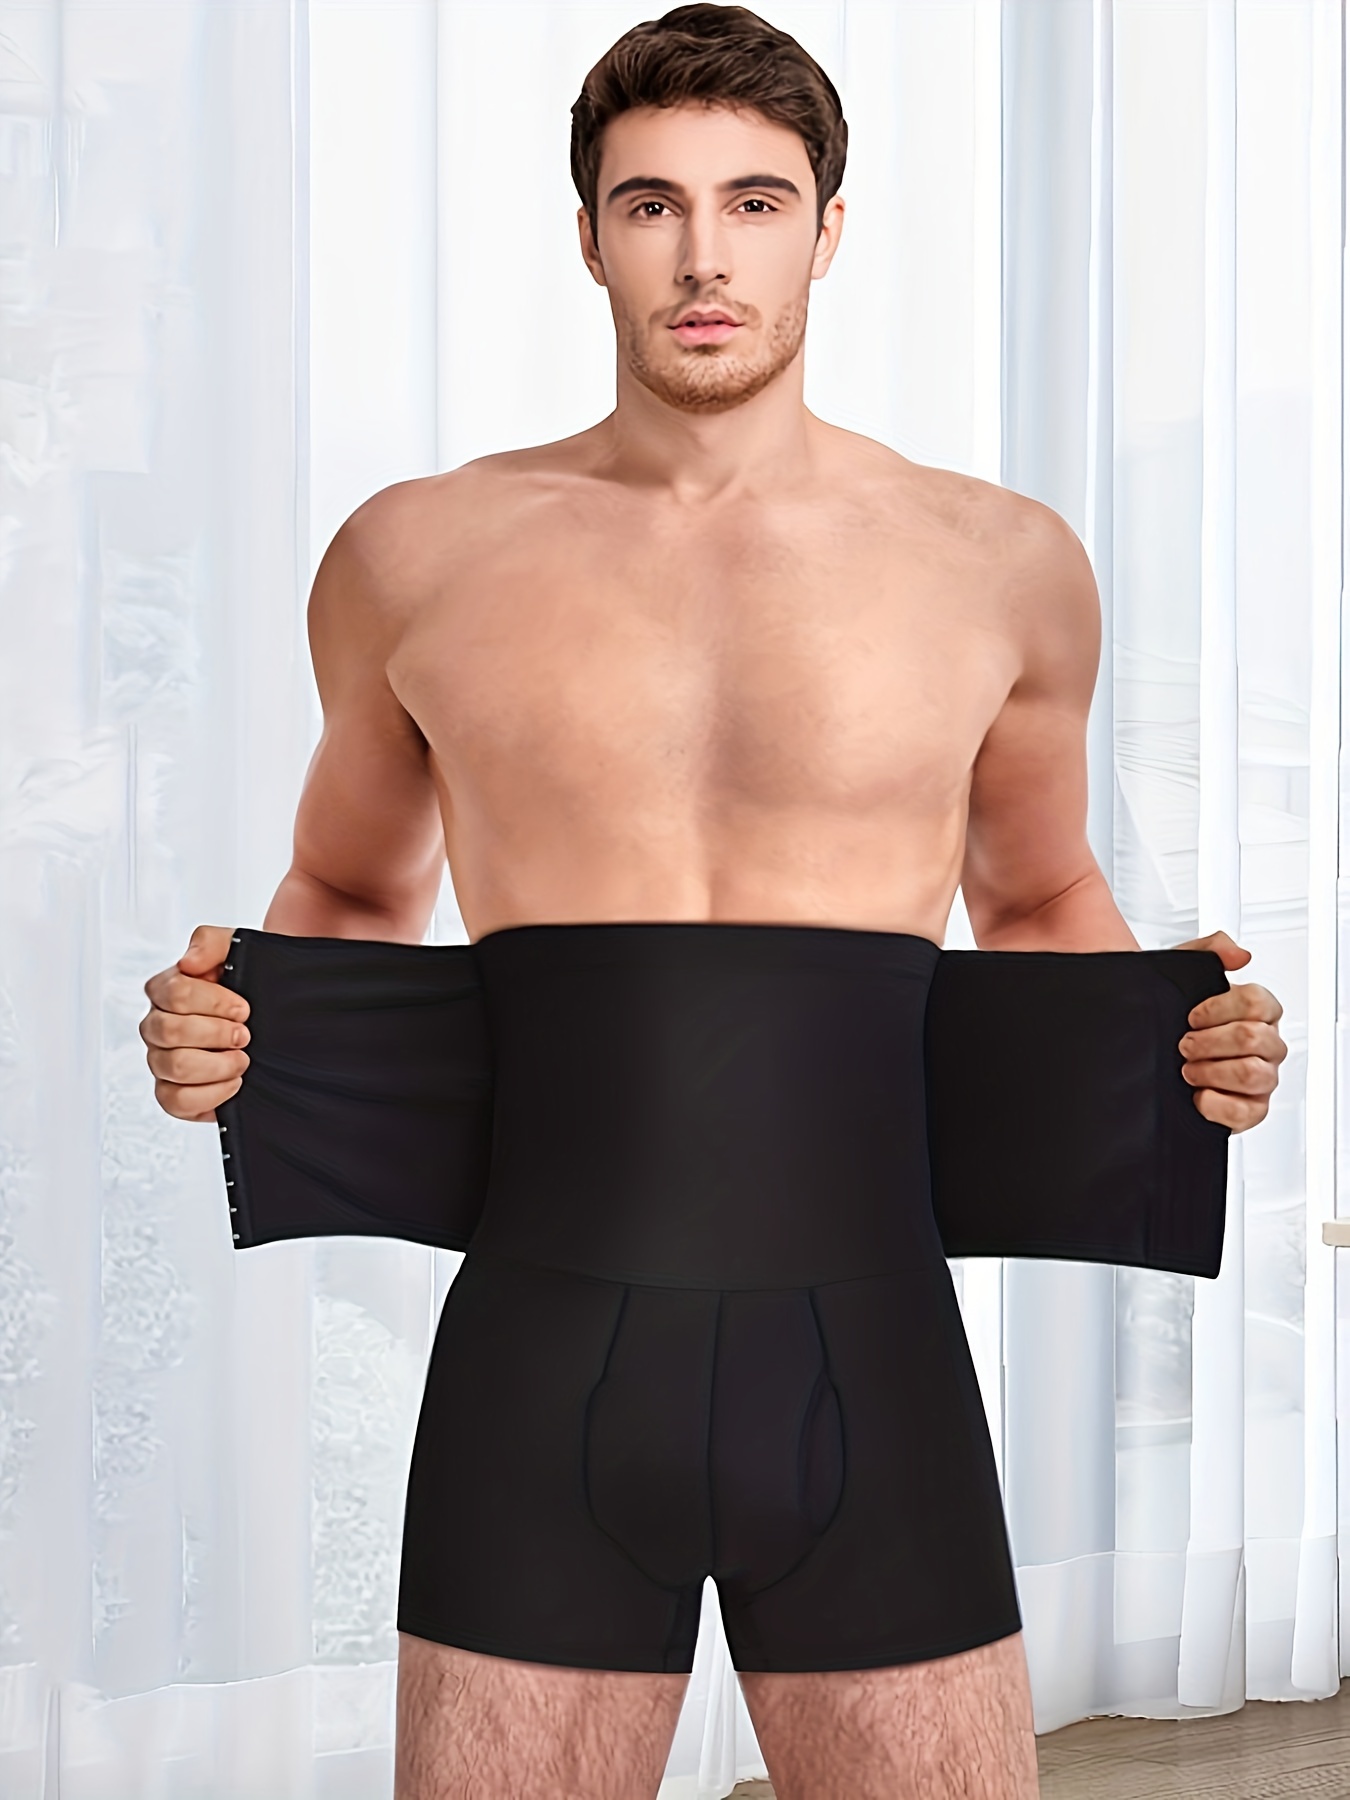 SCARBORO Men's High Waist Butt Lifter Tummy Control Slimming Body Shaper  Adjustable Shapewear